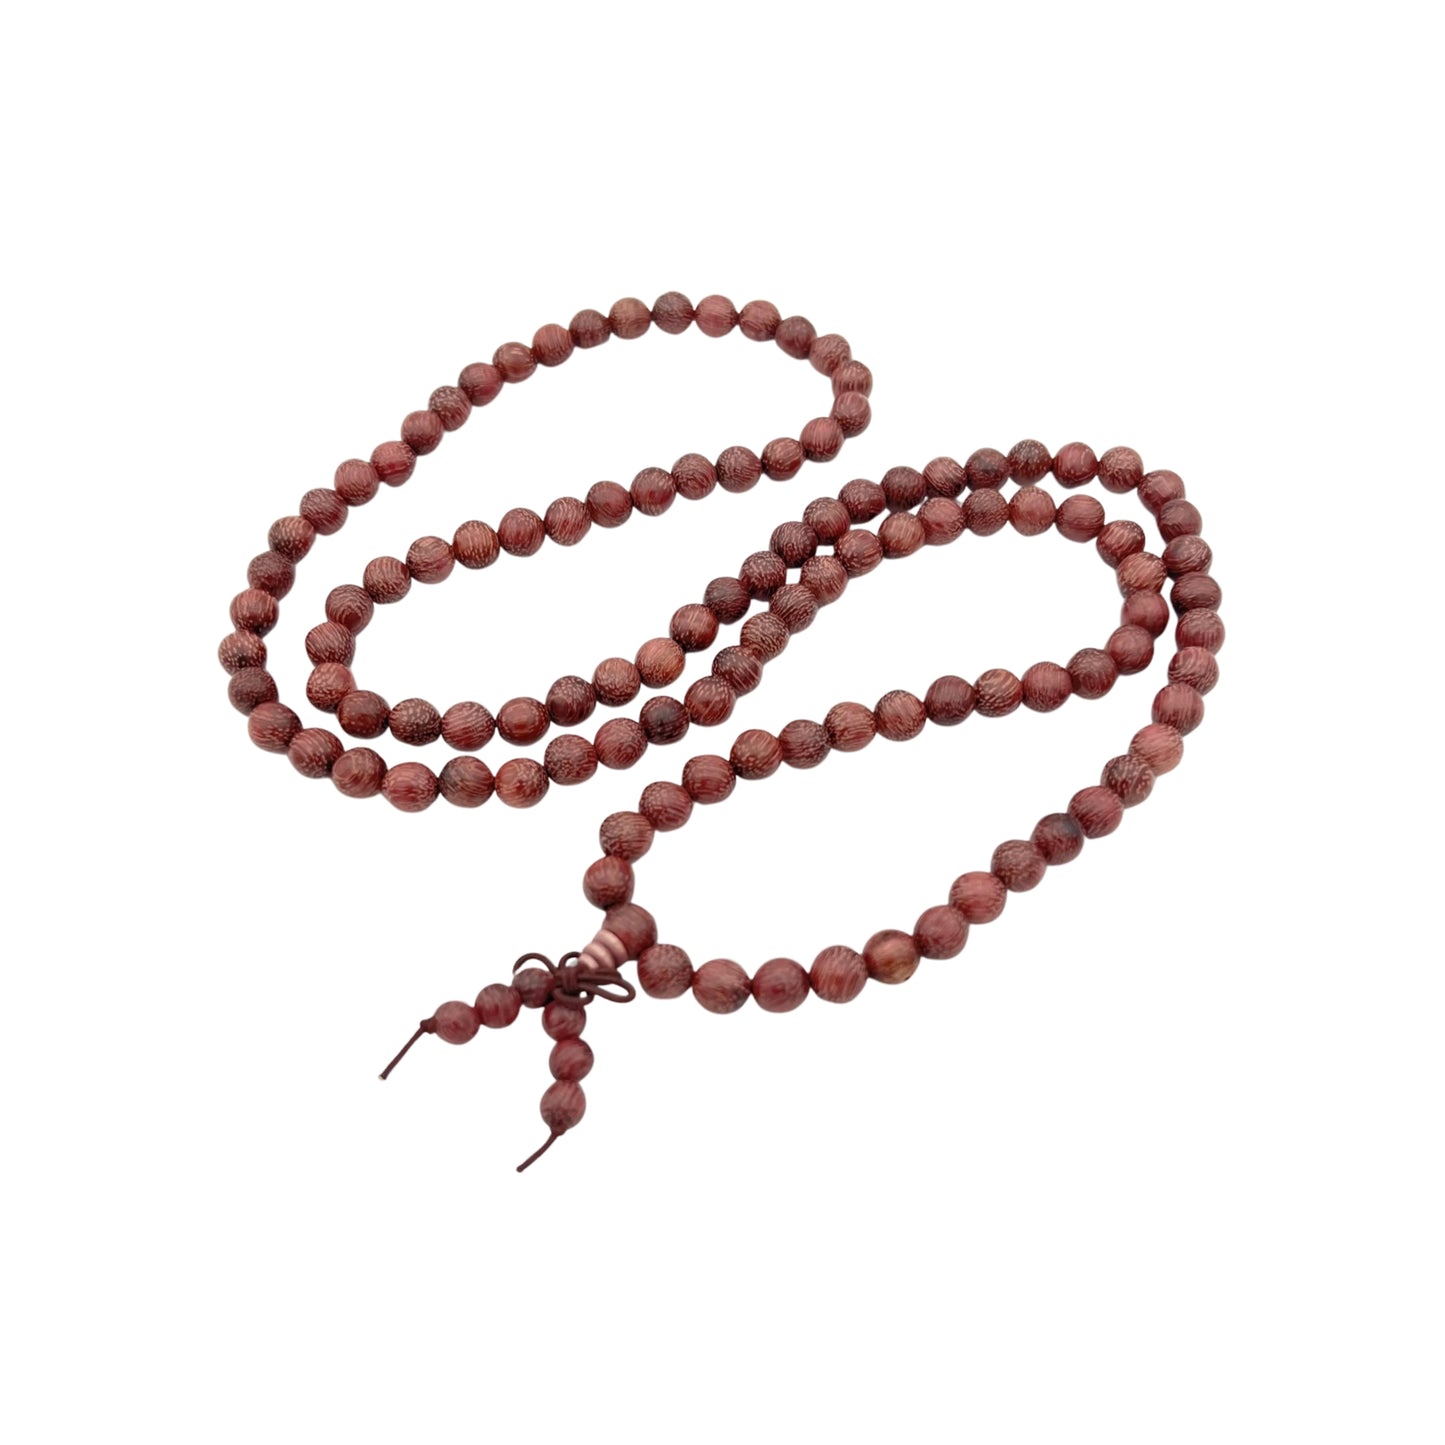 Stretchy Purpleheart Wood 108 Bead Mala - Prayer Beads - 8mm (1 Pack)